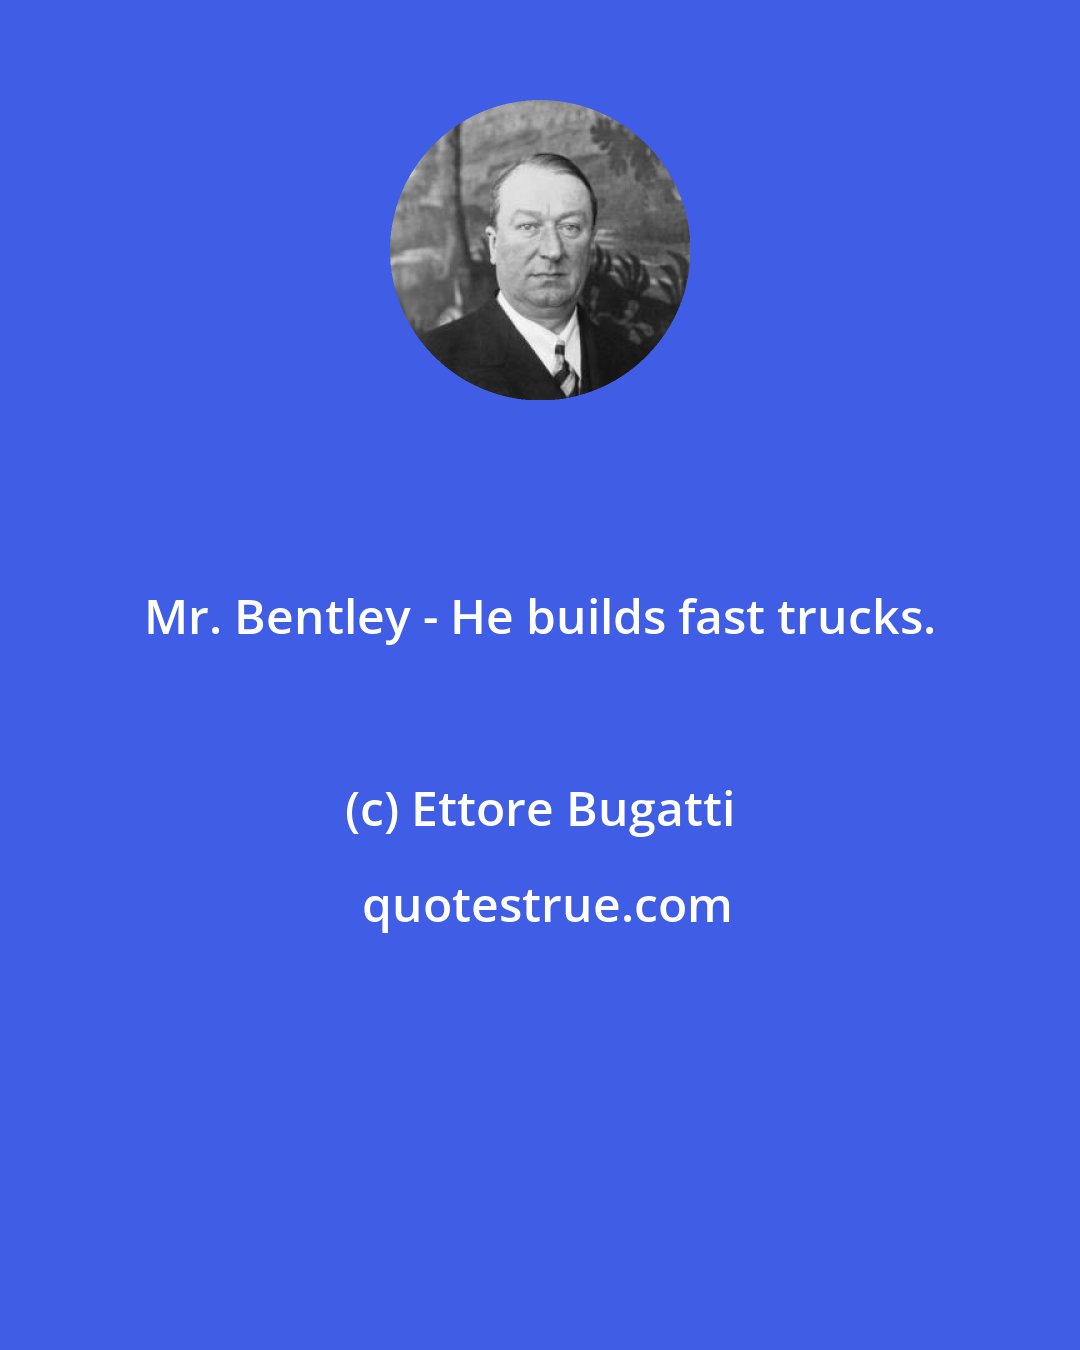 Ettore Bugatti: Mr. Bentley - He builds fast trucks.